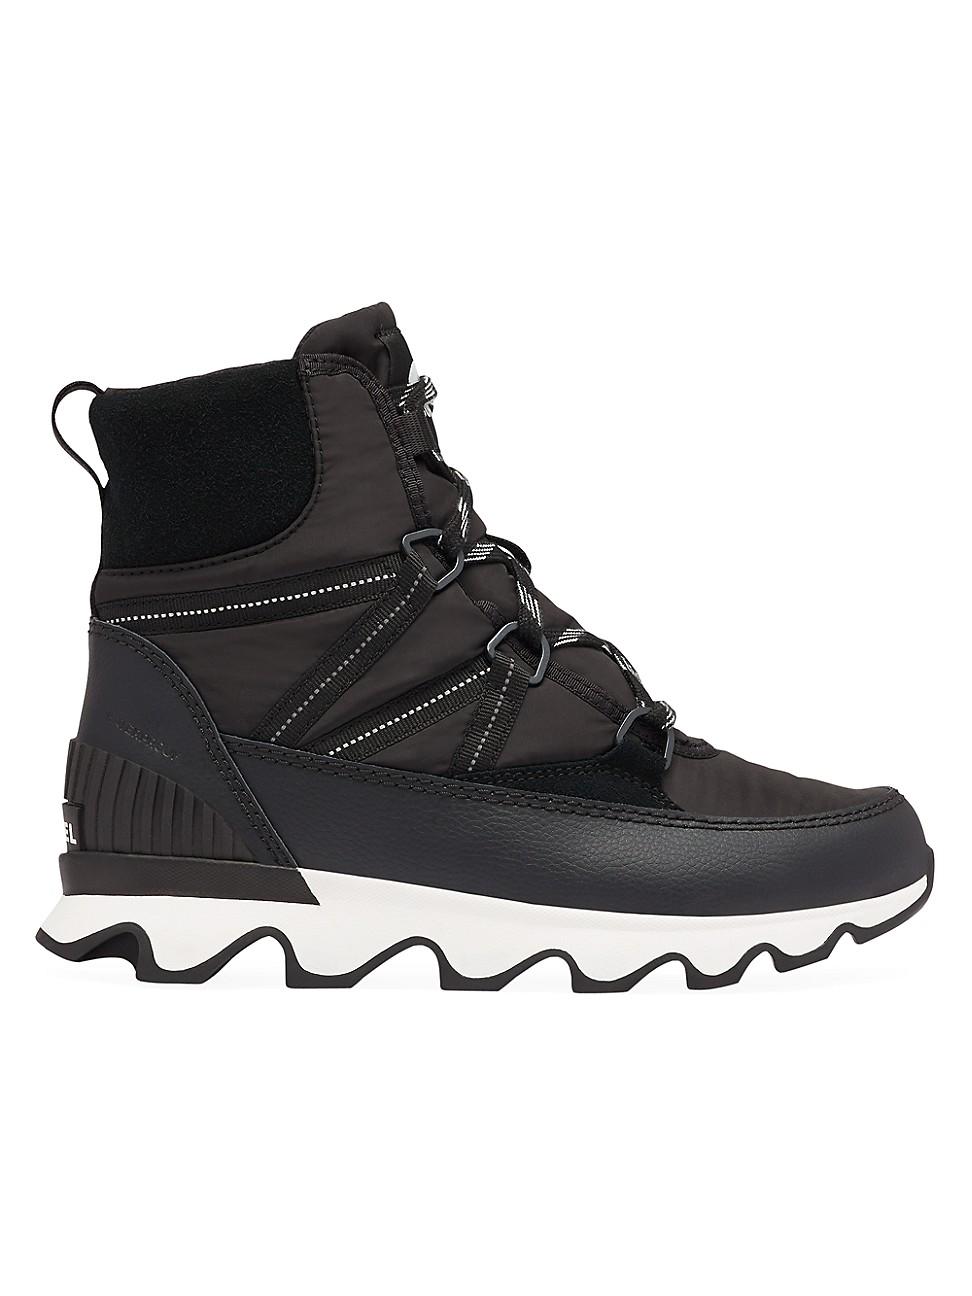 Sorel Kinetic Sport Hiking Boots in Black - Lyst